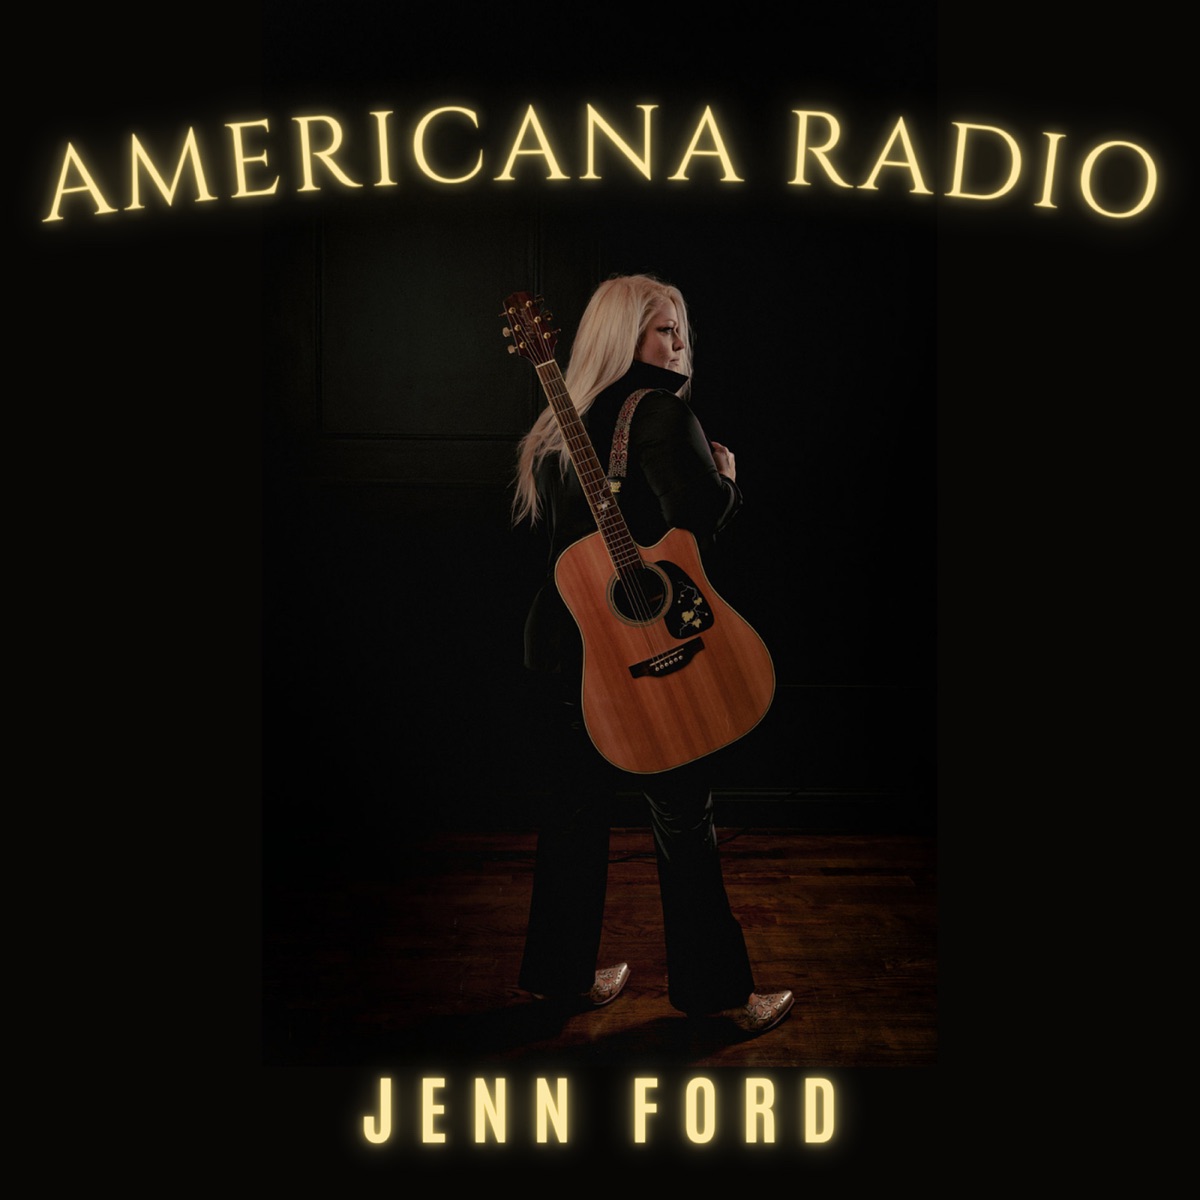 Americana Radio by Jenn Ford on Apple Music